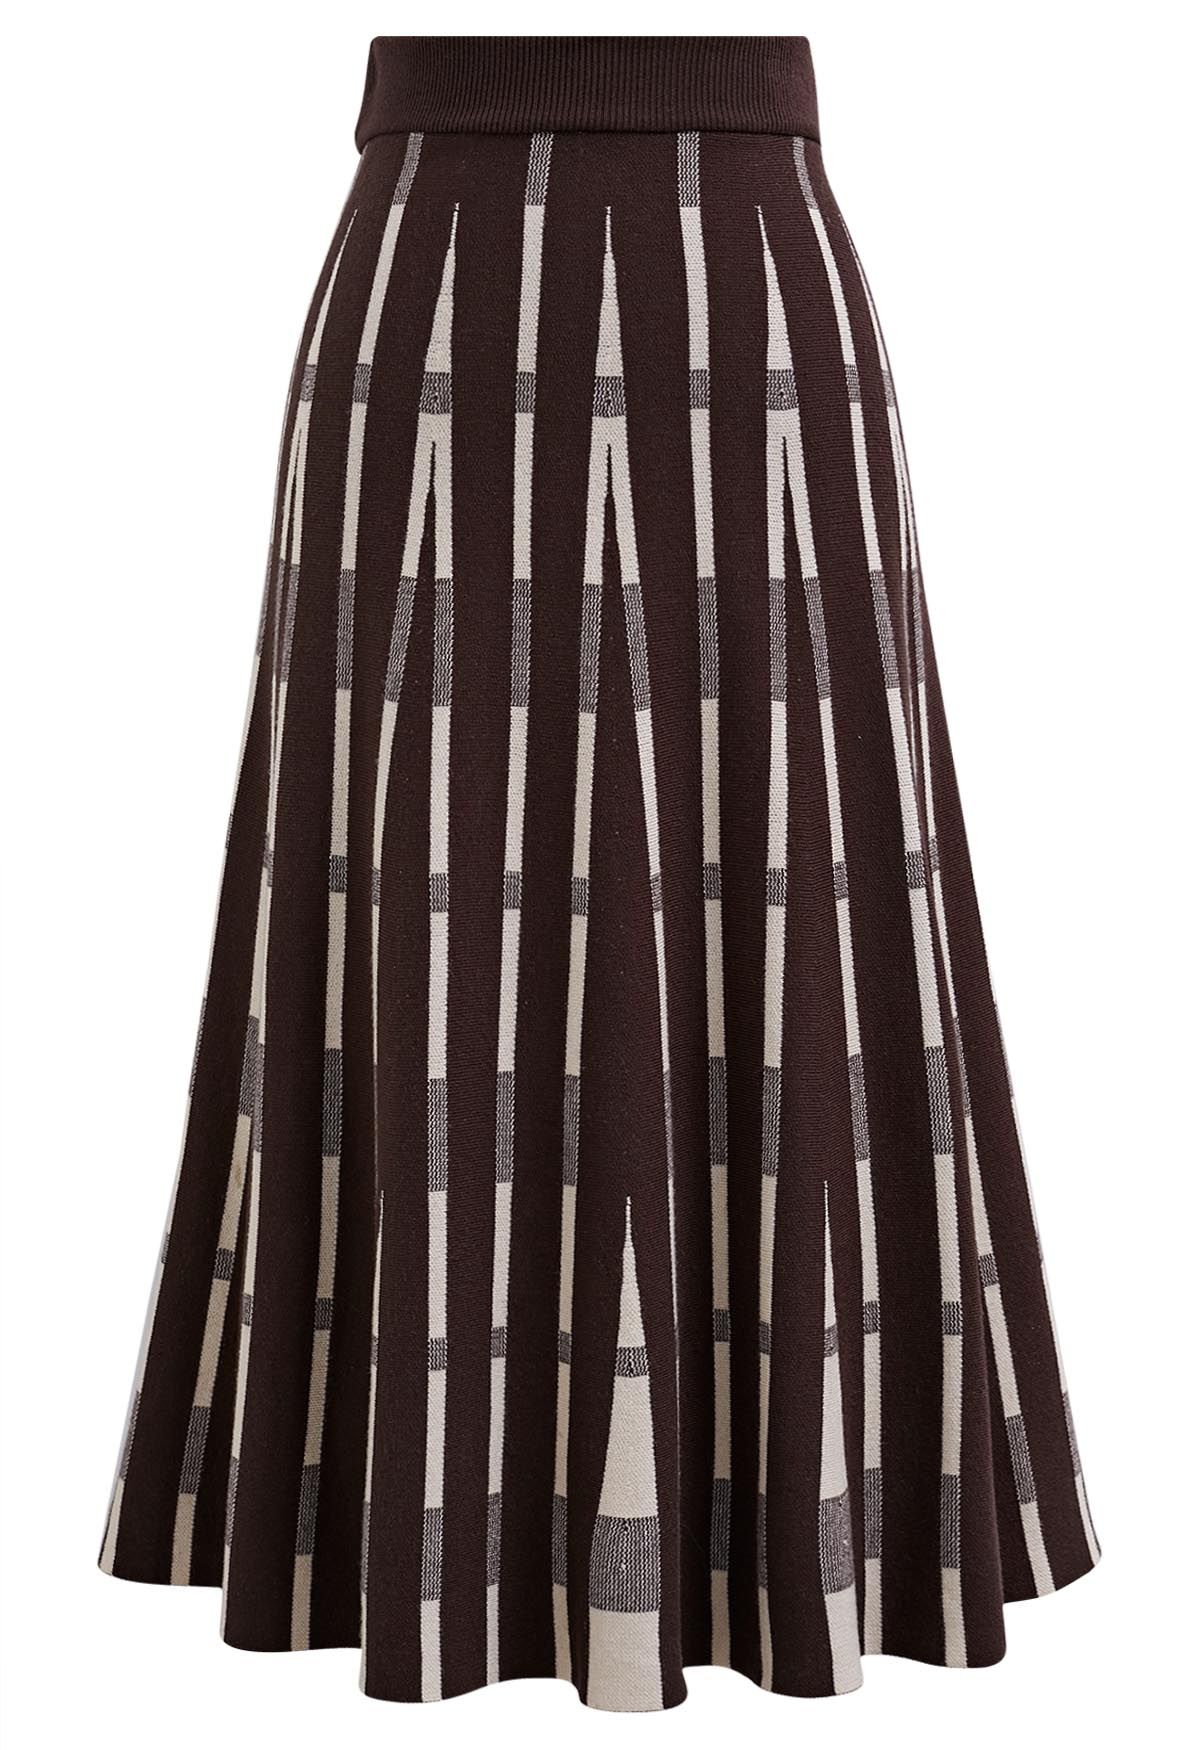 Trendsetting Striped Knit Midi Skirt in Brown